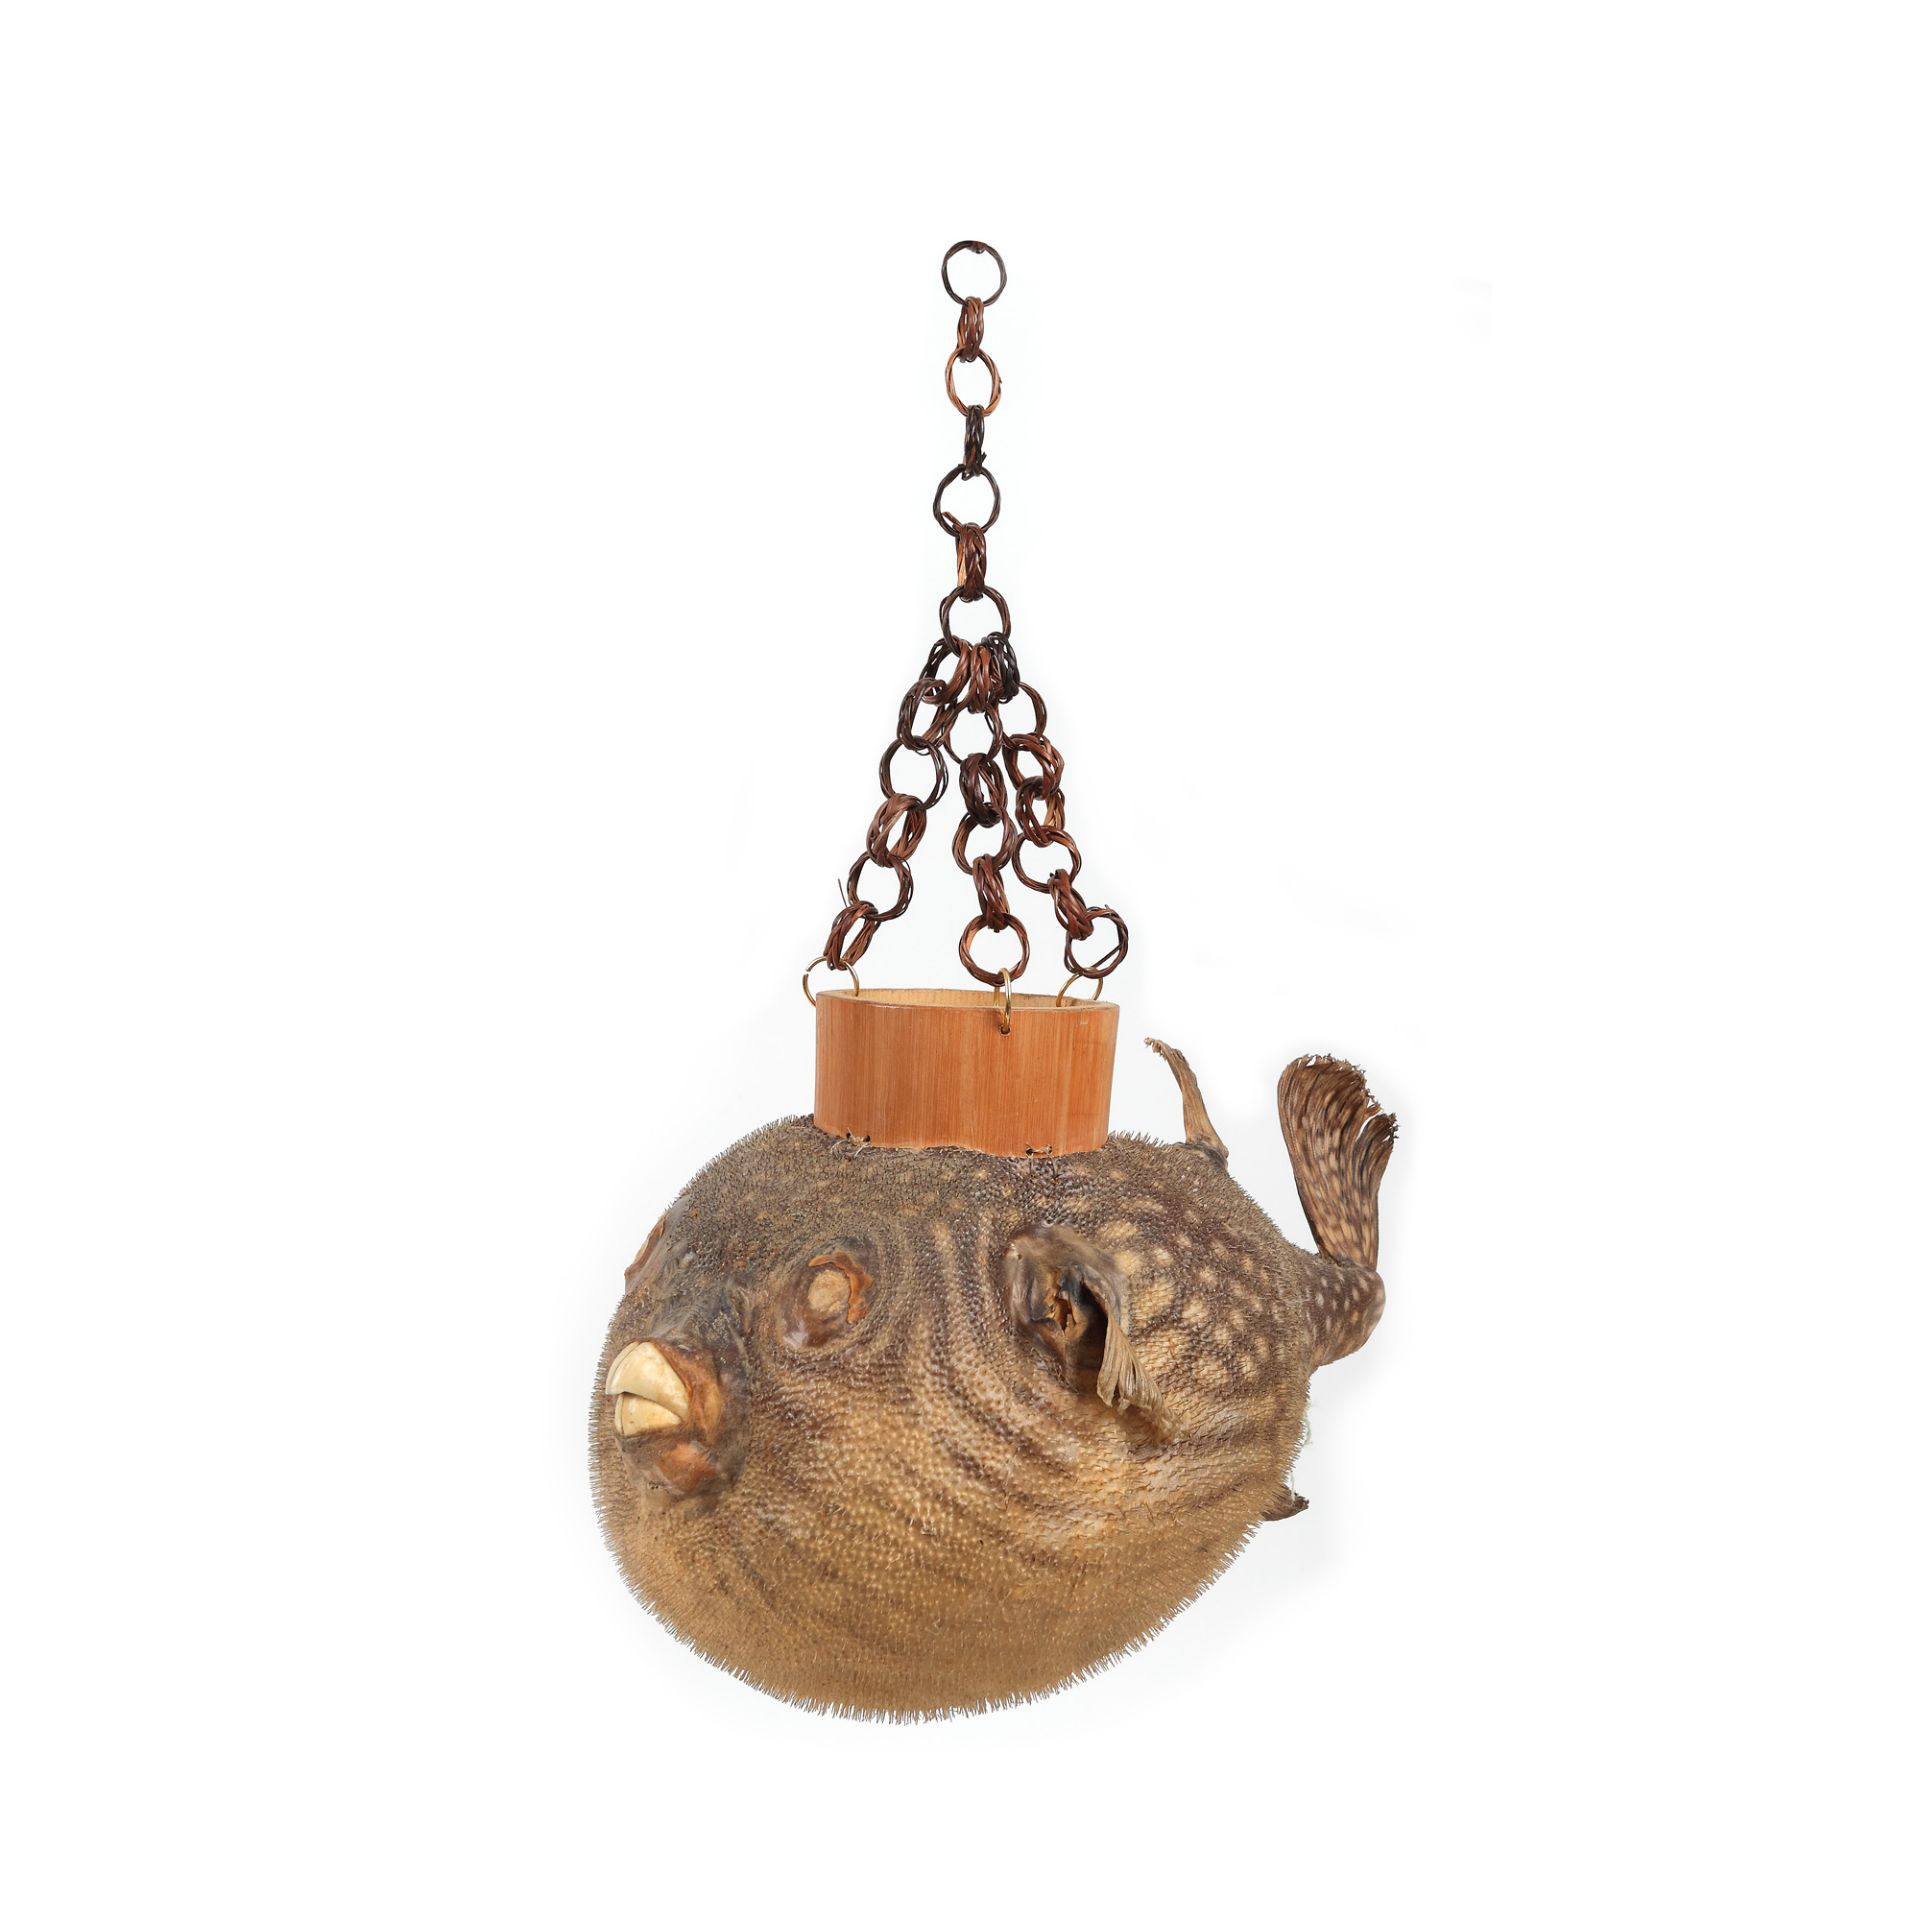 Balloon fish lamp - Image 2 of 3